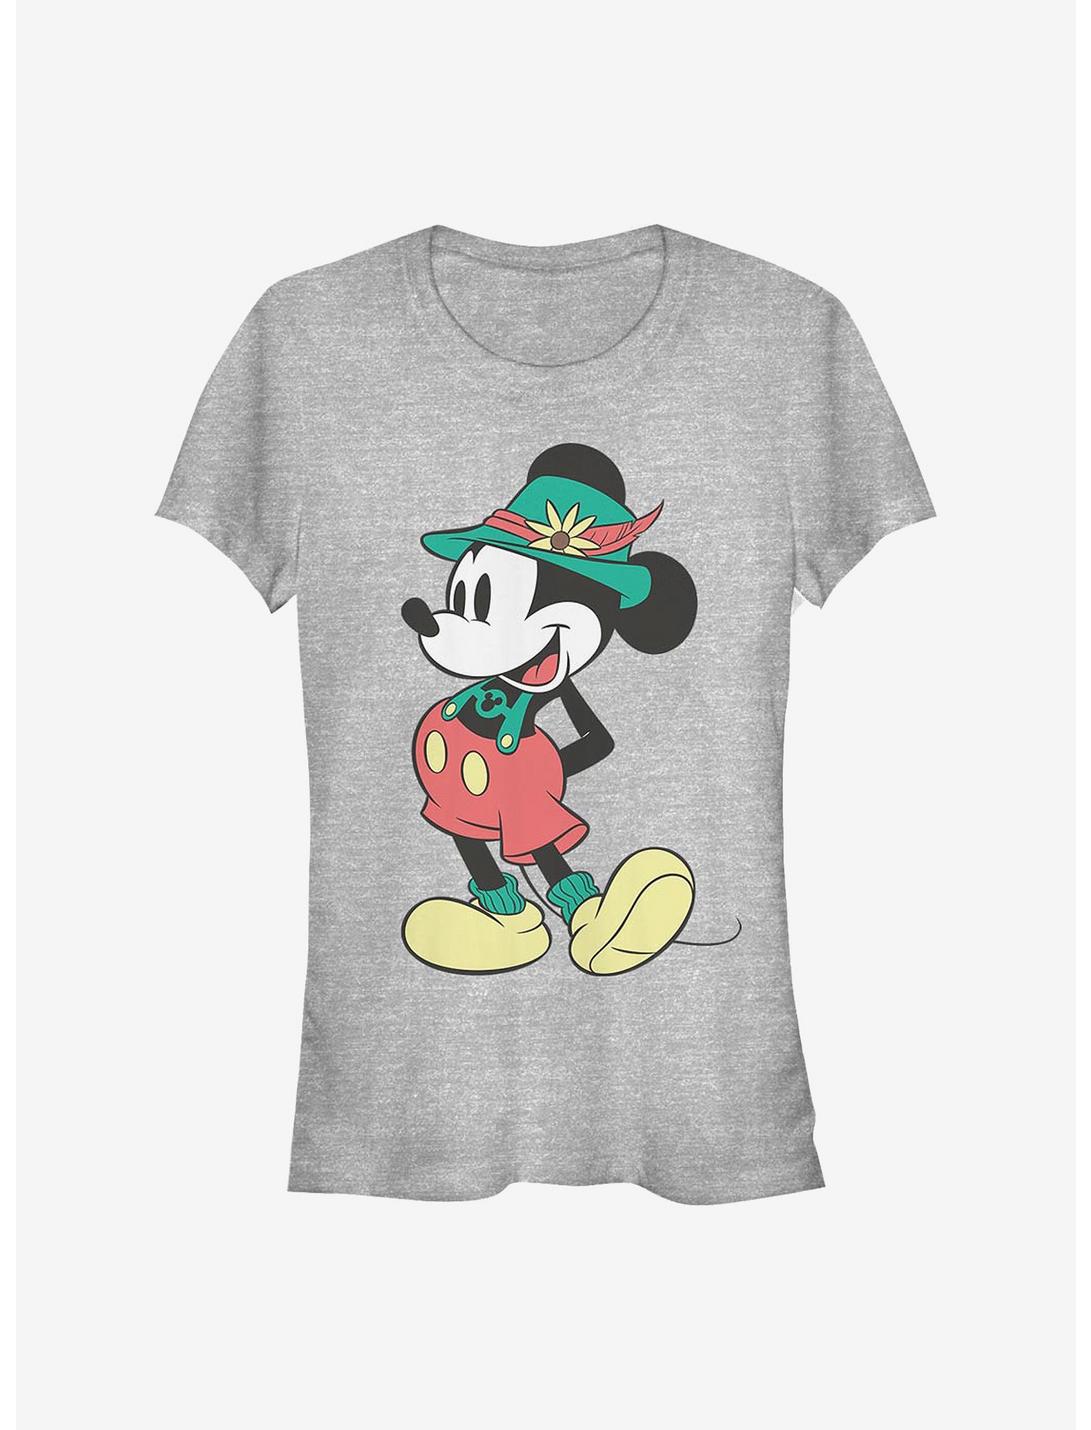 Disney Mickey Mouse Lederhosen Basics Girls T-Shirt, ATH HTR, hi-res